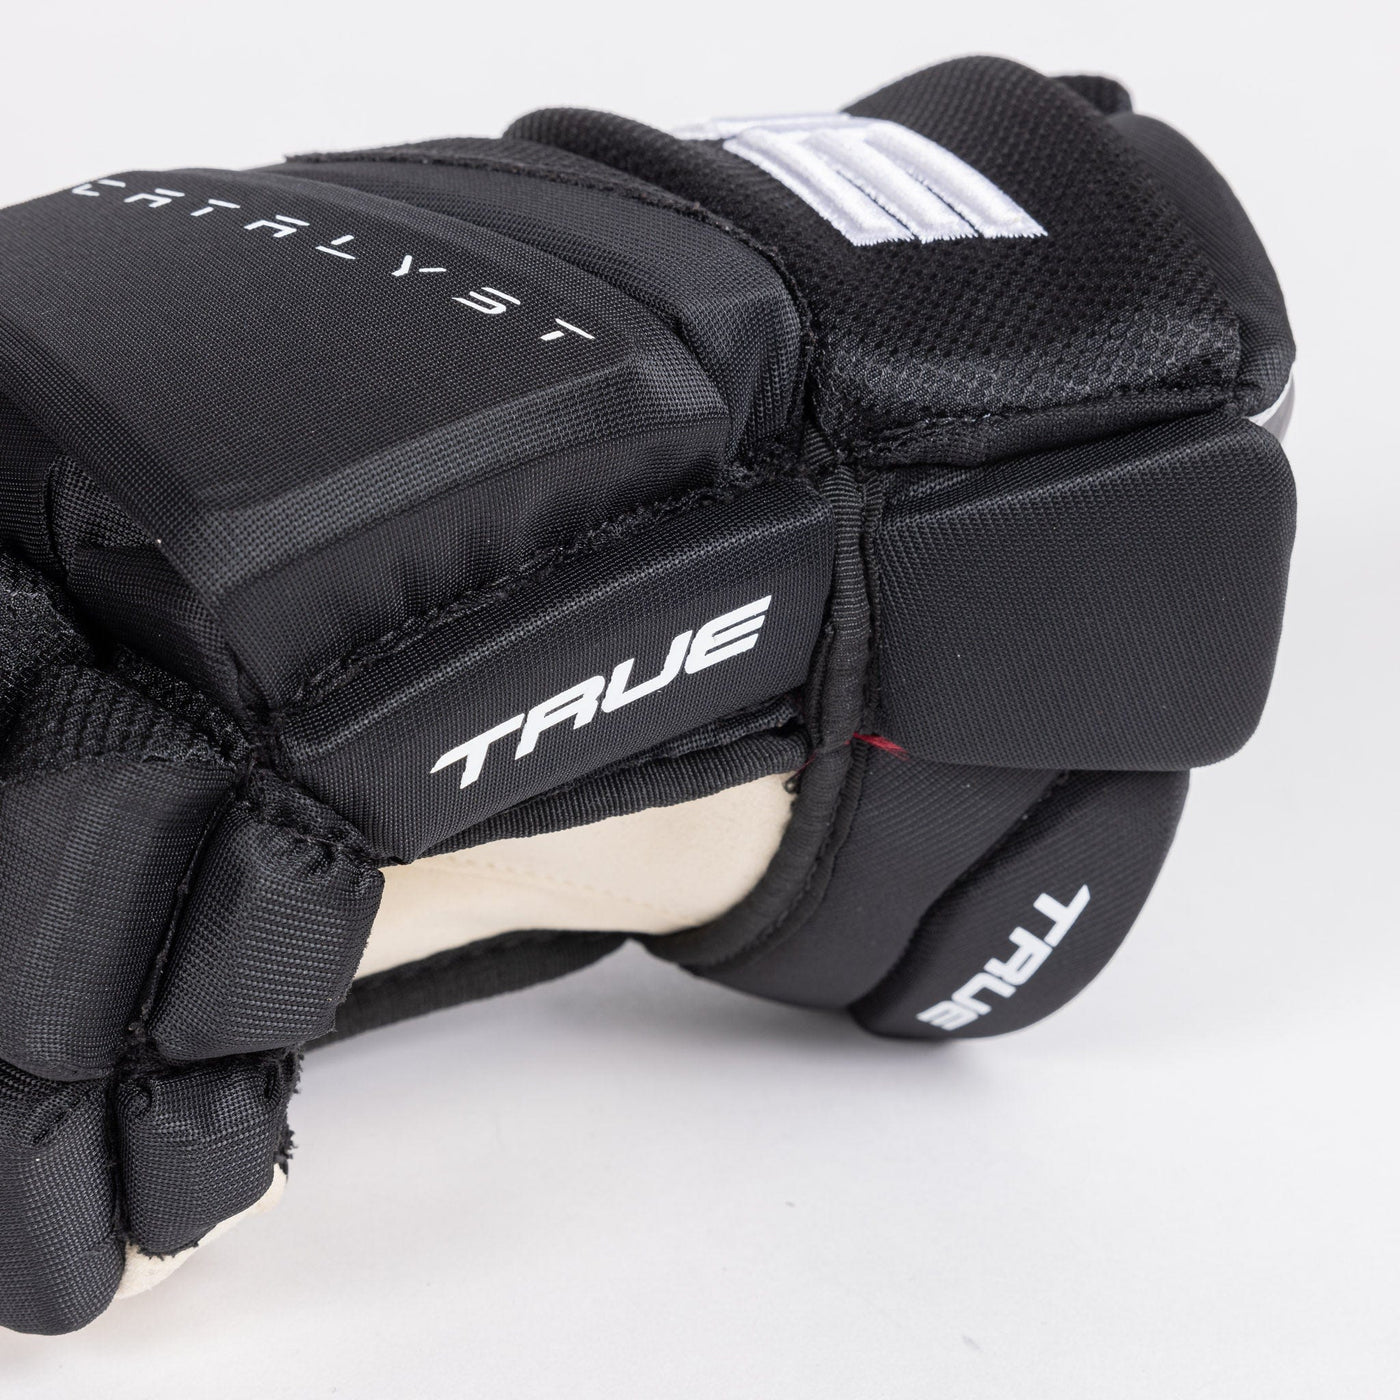 TRUE Catalyst Pro Stock Senior Hockey Glove - Winnipeg - The Hockey Shop Source For Sports